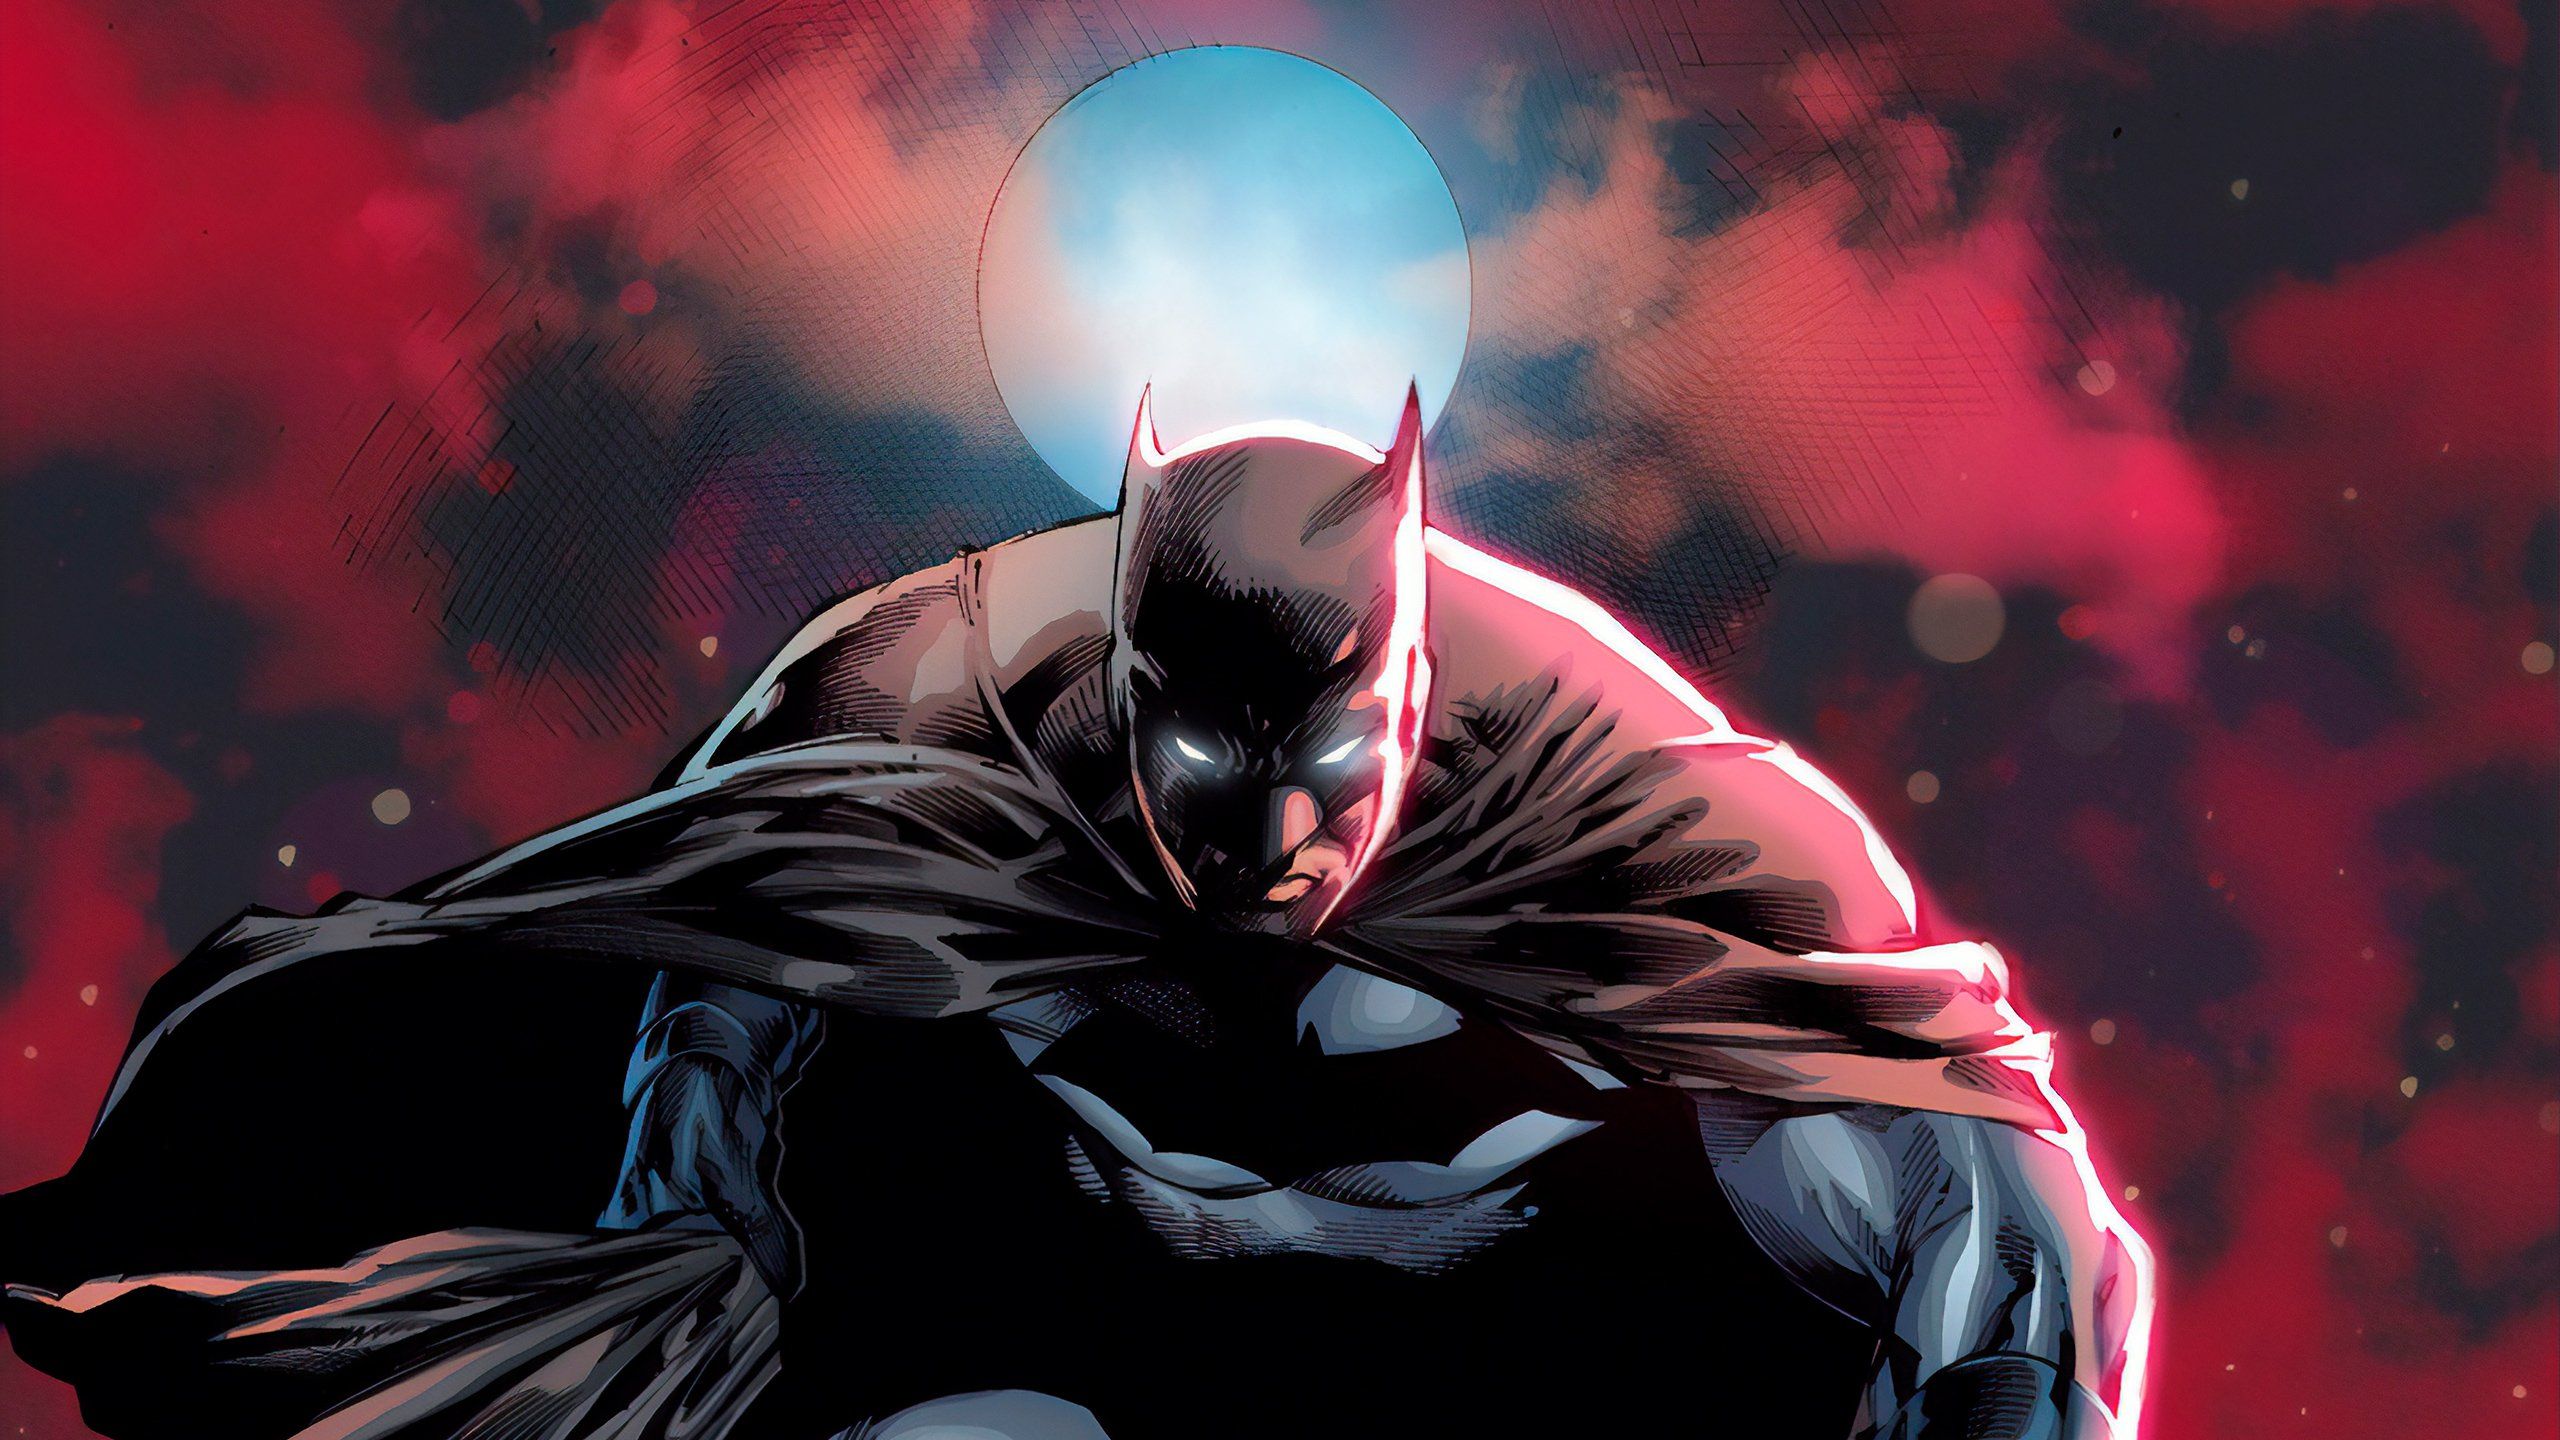 Wallpaper Image Of Batman